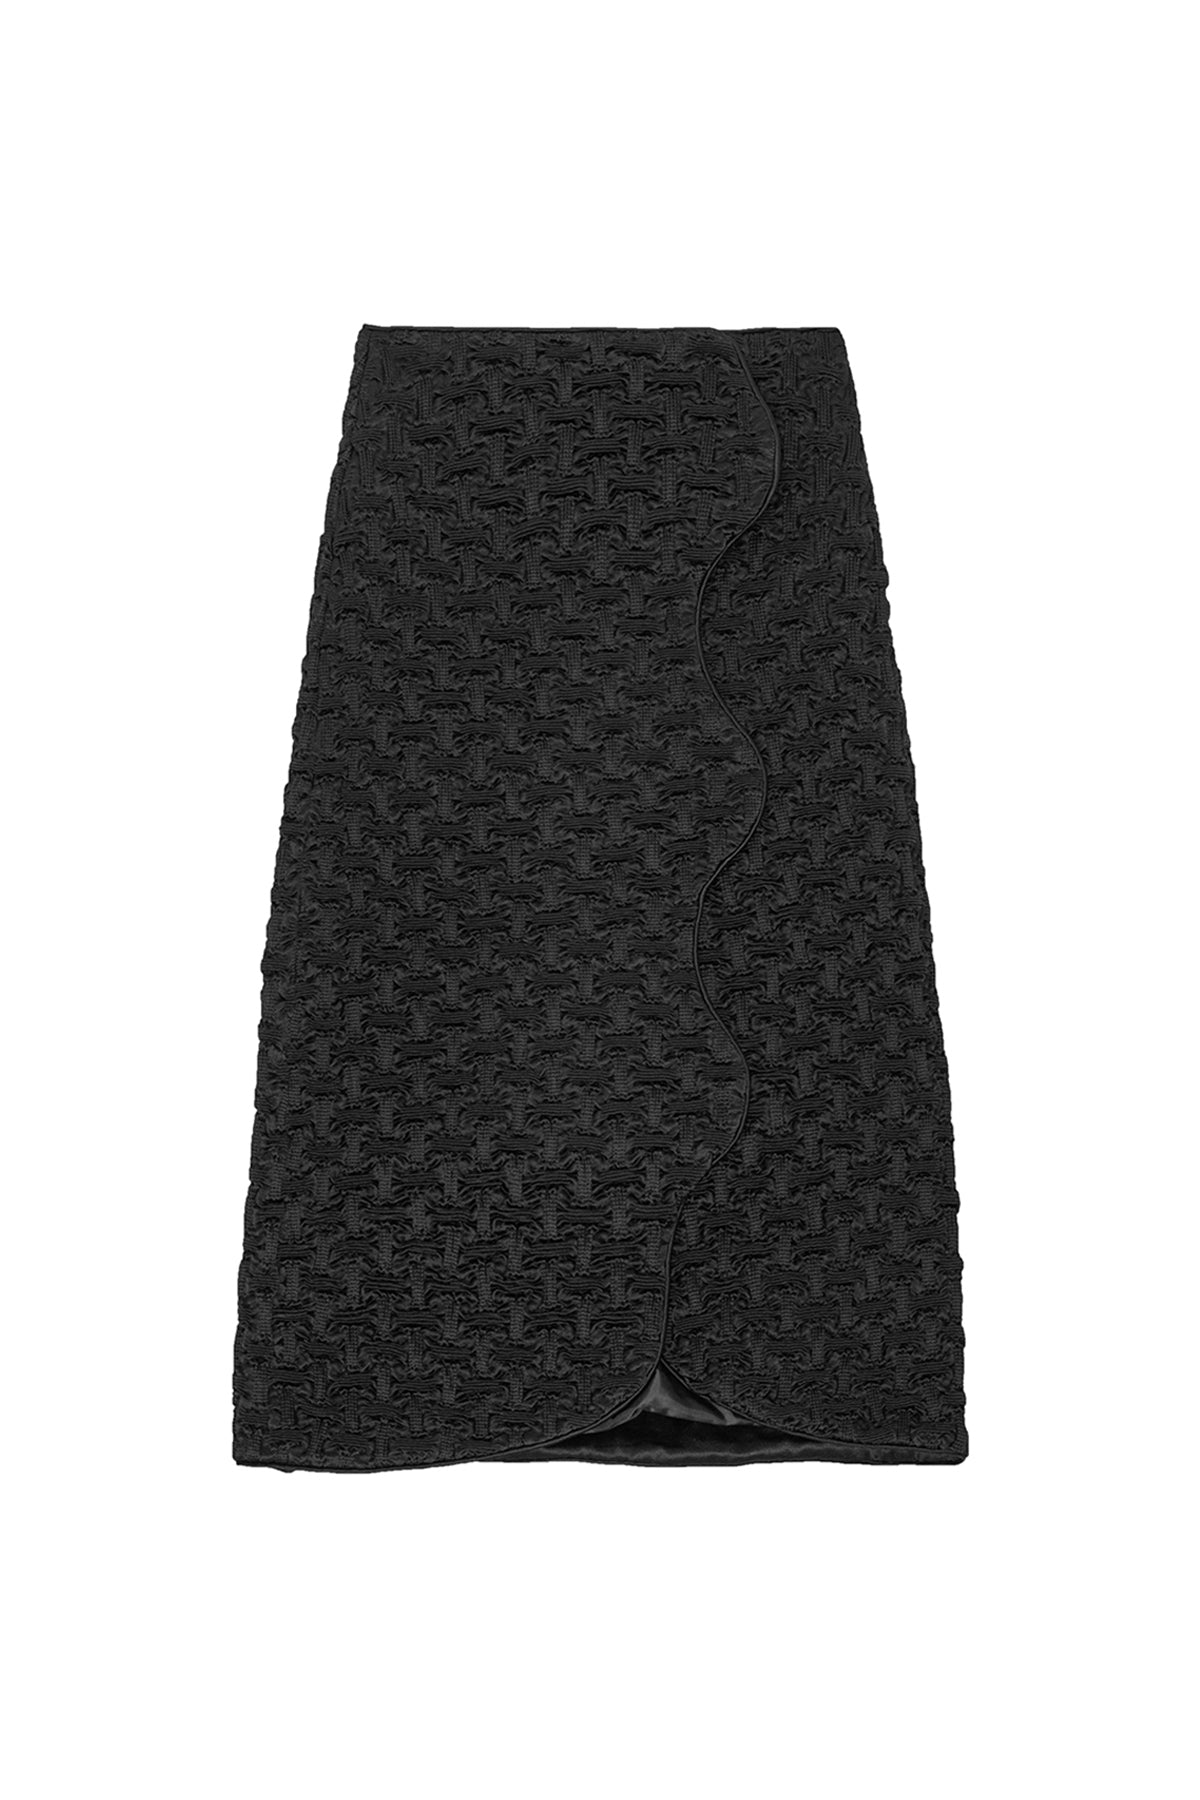 Ambre Skirt - Black by Hofmann Copenhagen